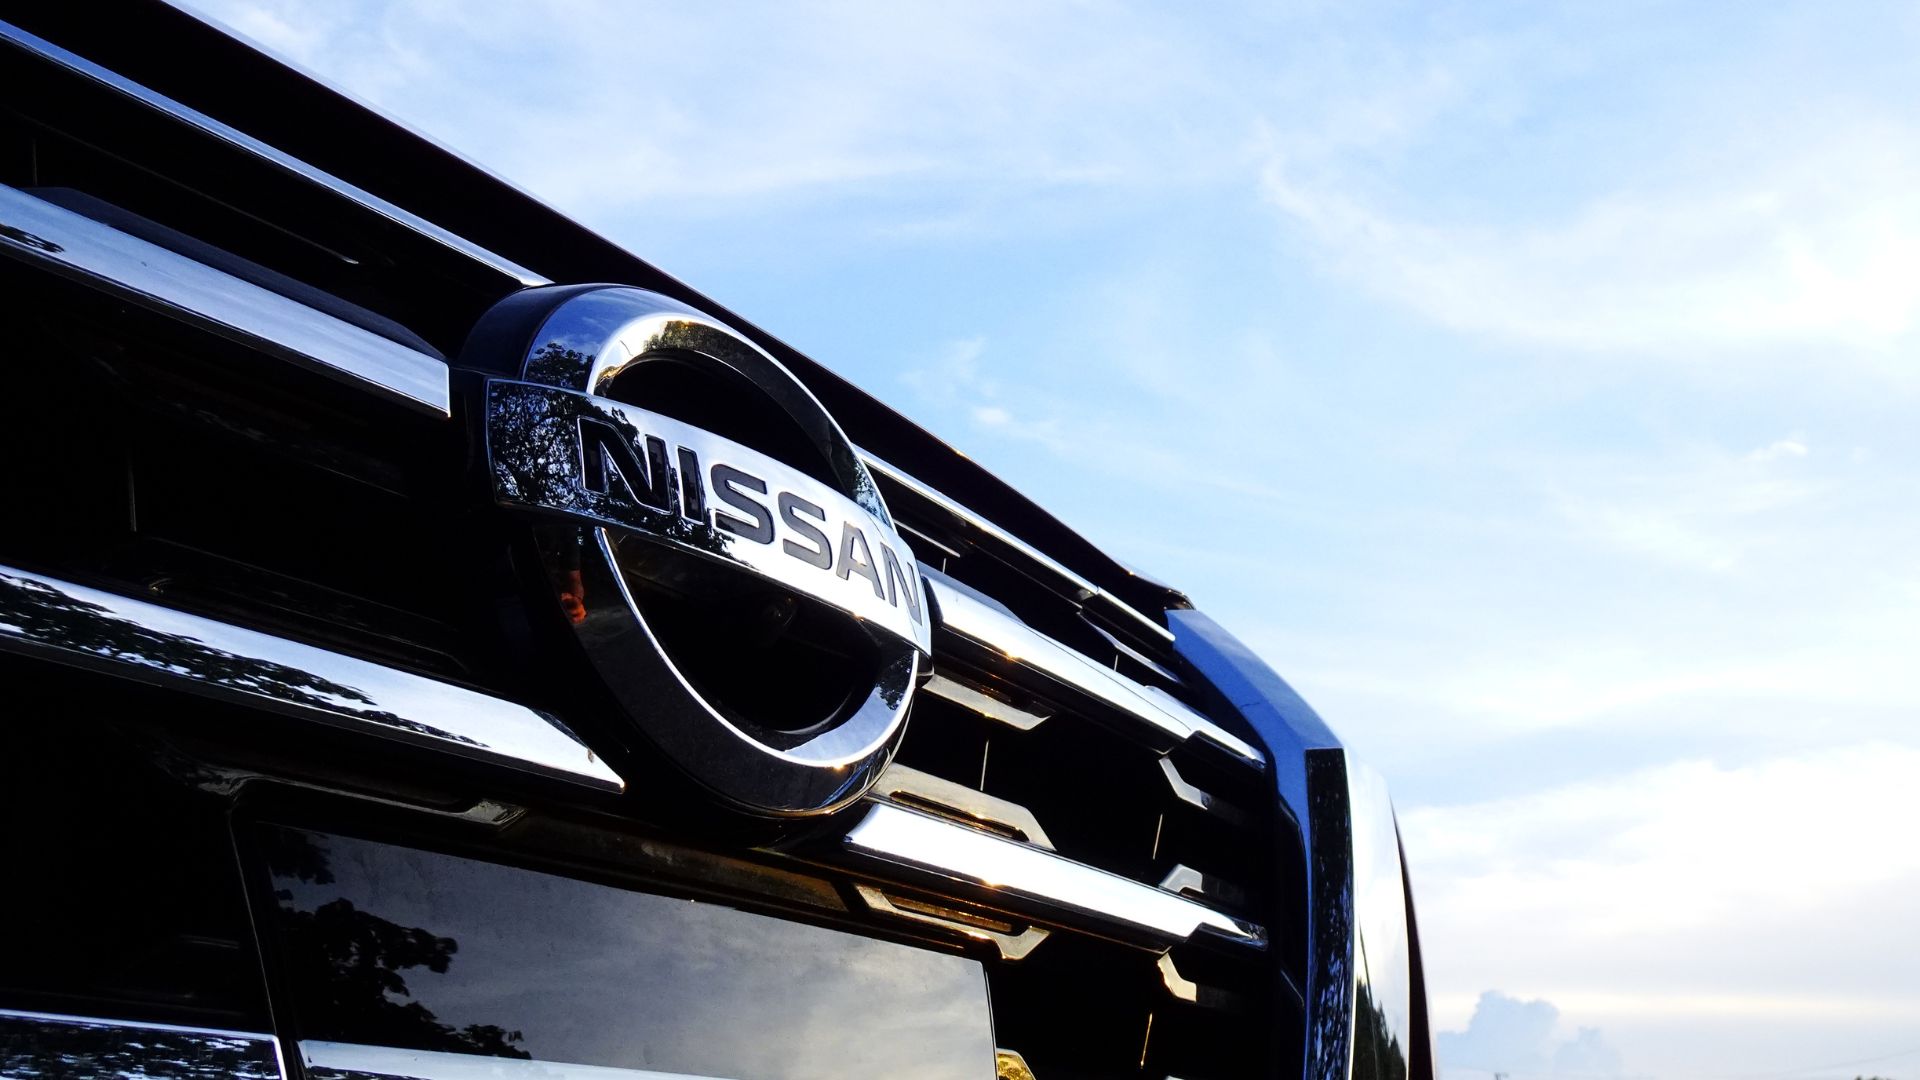 Nissan Terra VL 4x4 review